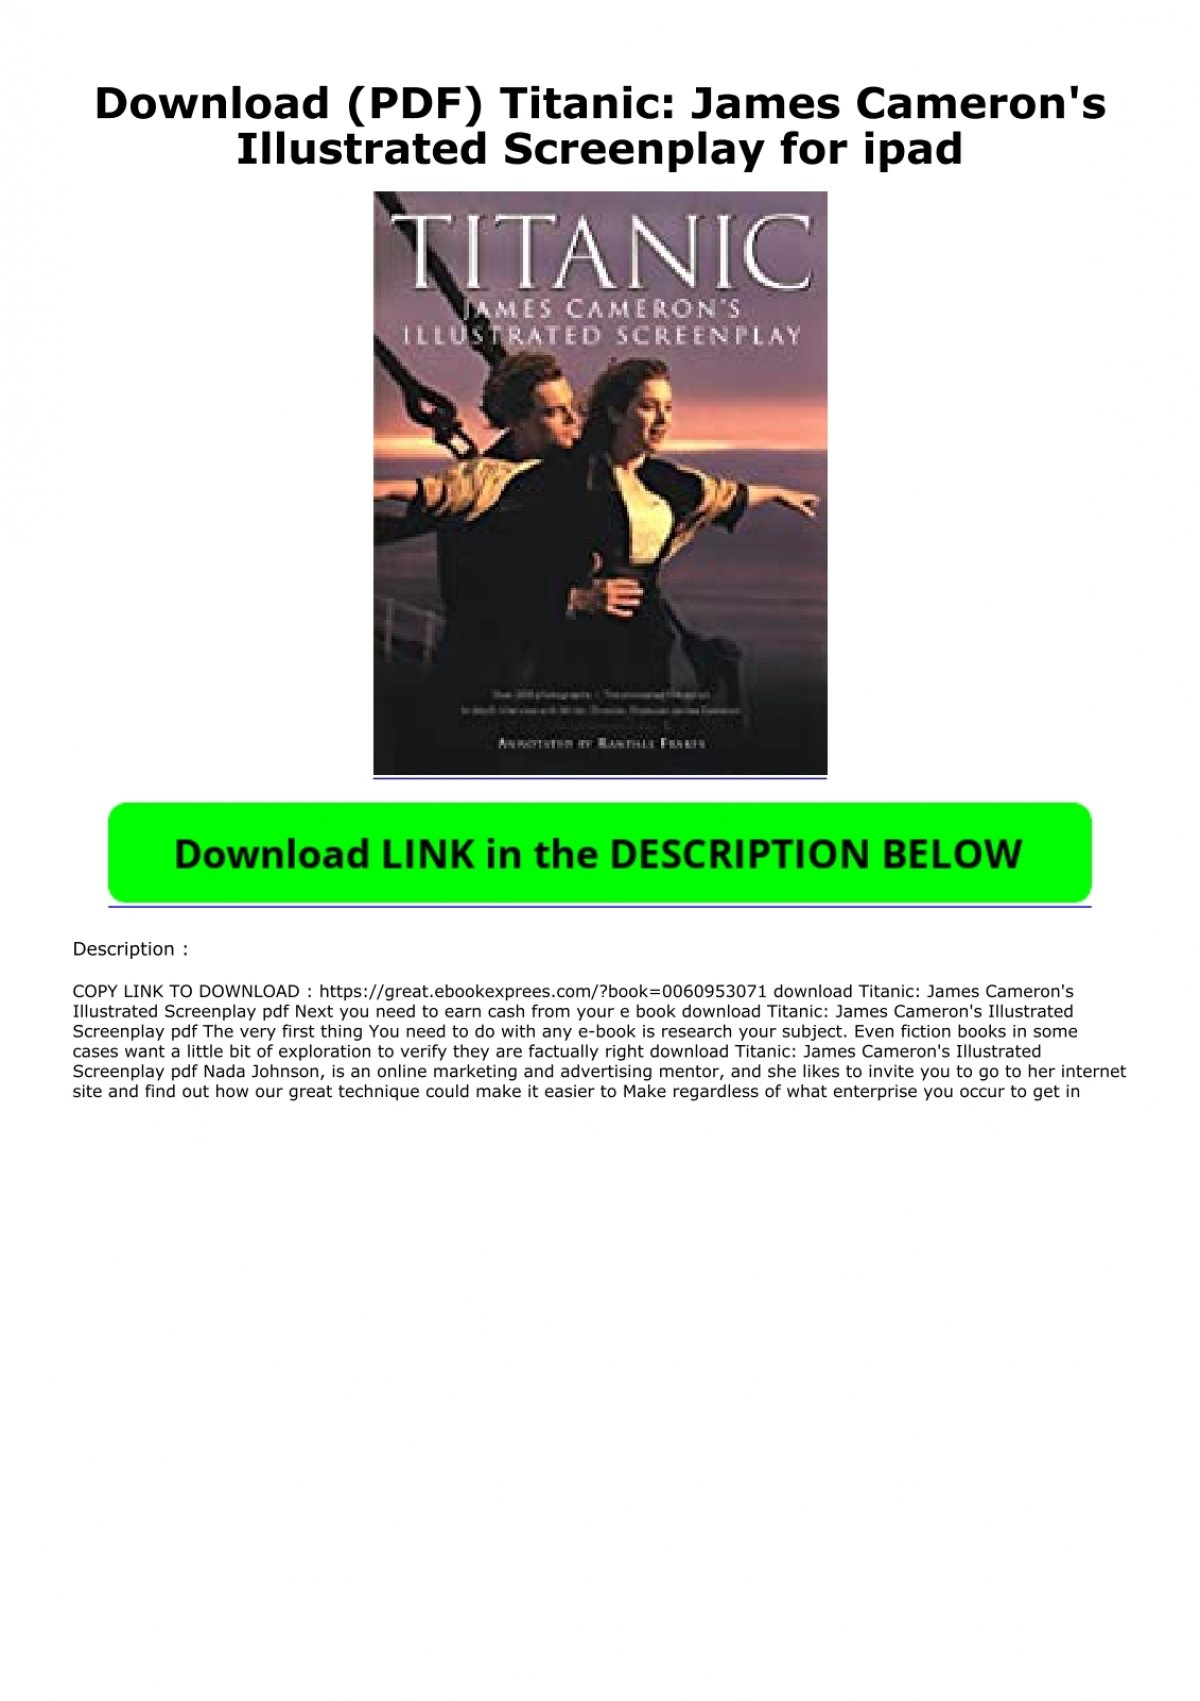 Download (PDF) Titanic: James Cameron's Illustrated Screenplay for ipad